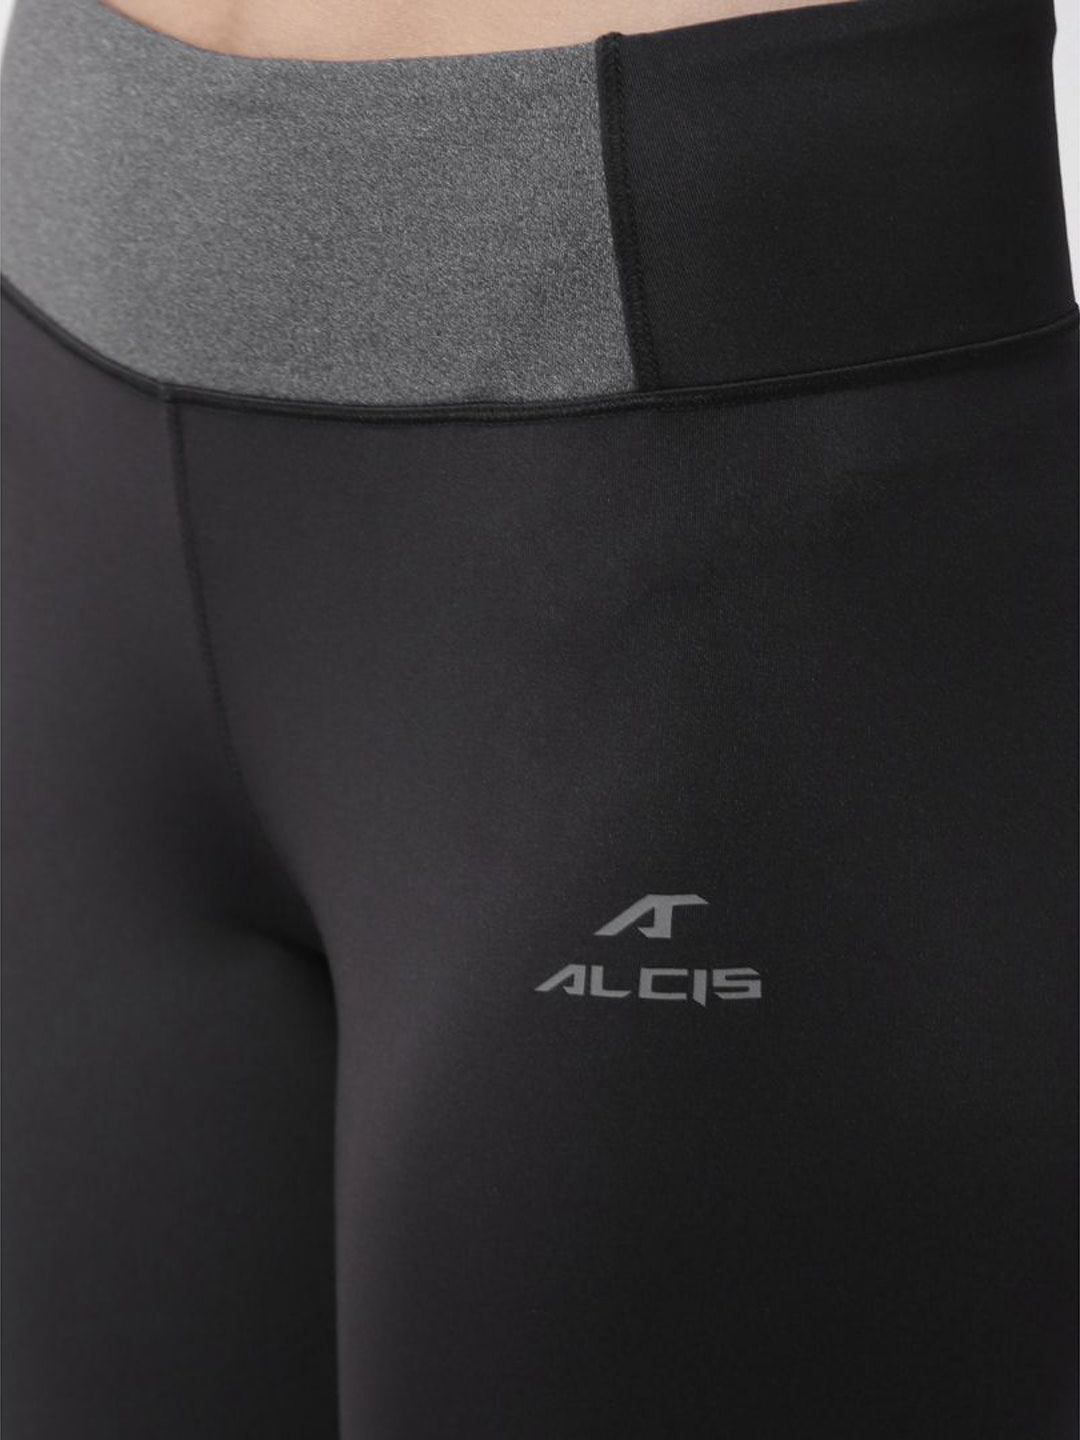 Alcis Women Black  Grey Colourblocked Tights